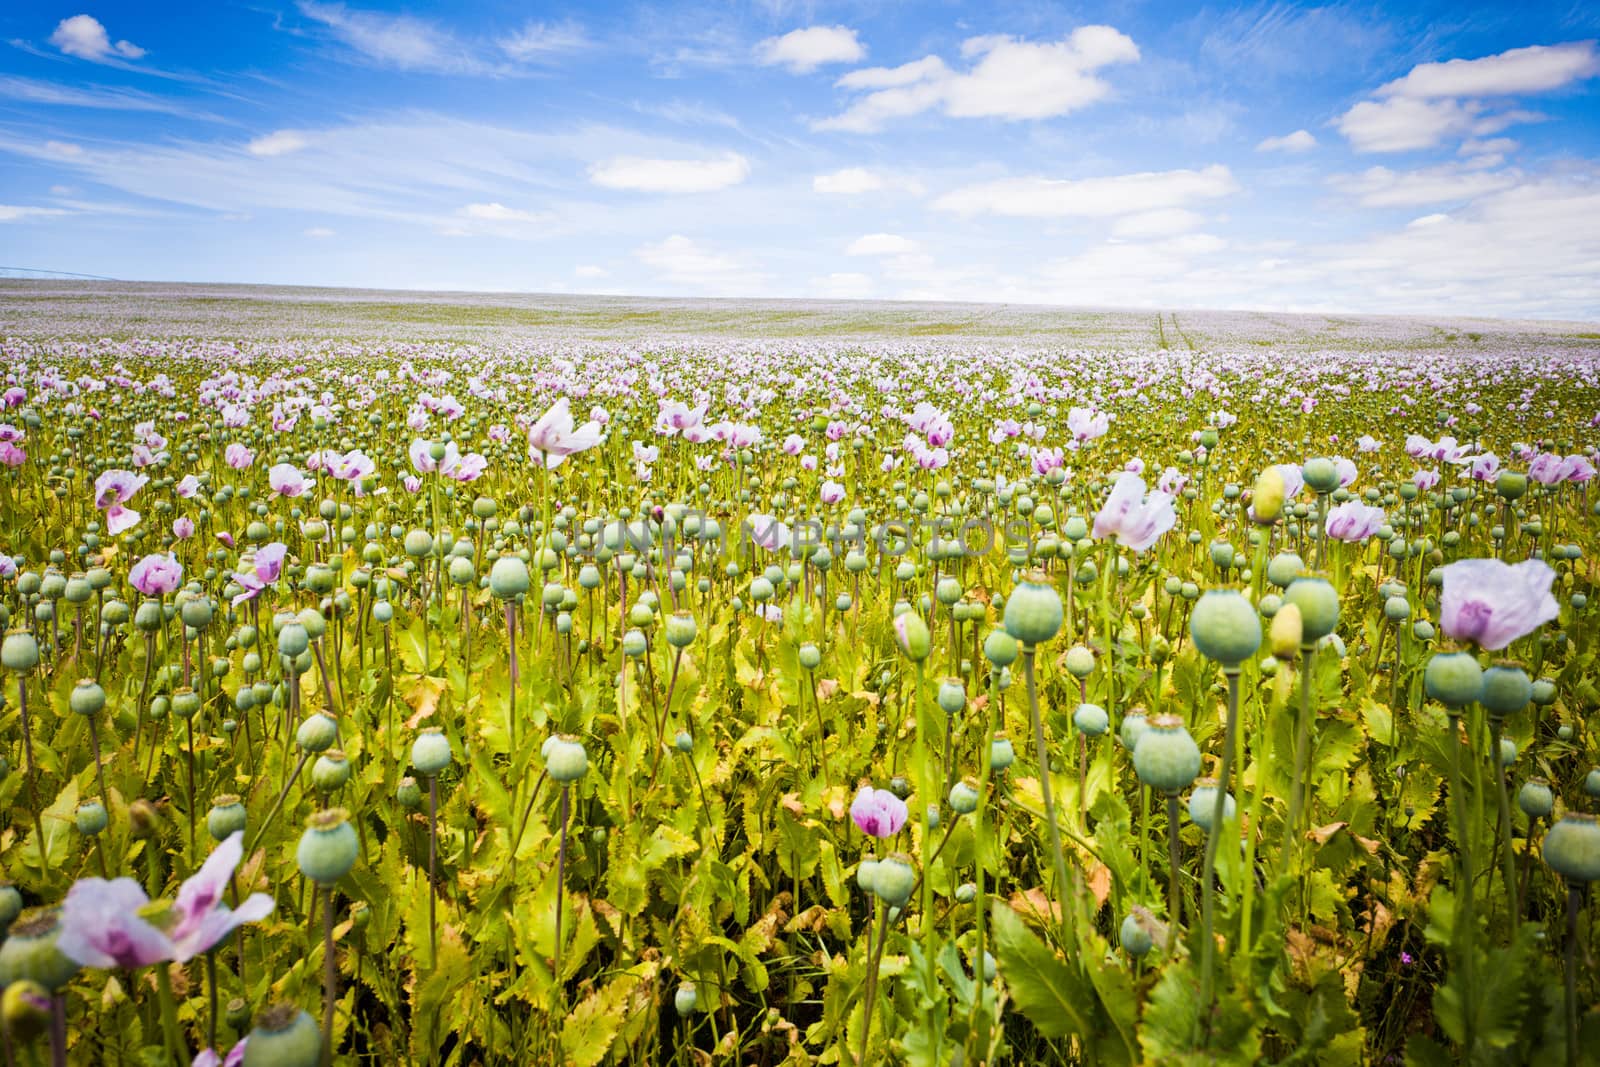 Photograph of field of beautiful flowers in Tasmania, Australia.